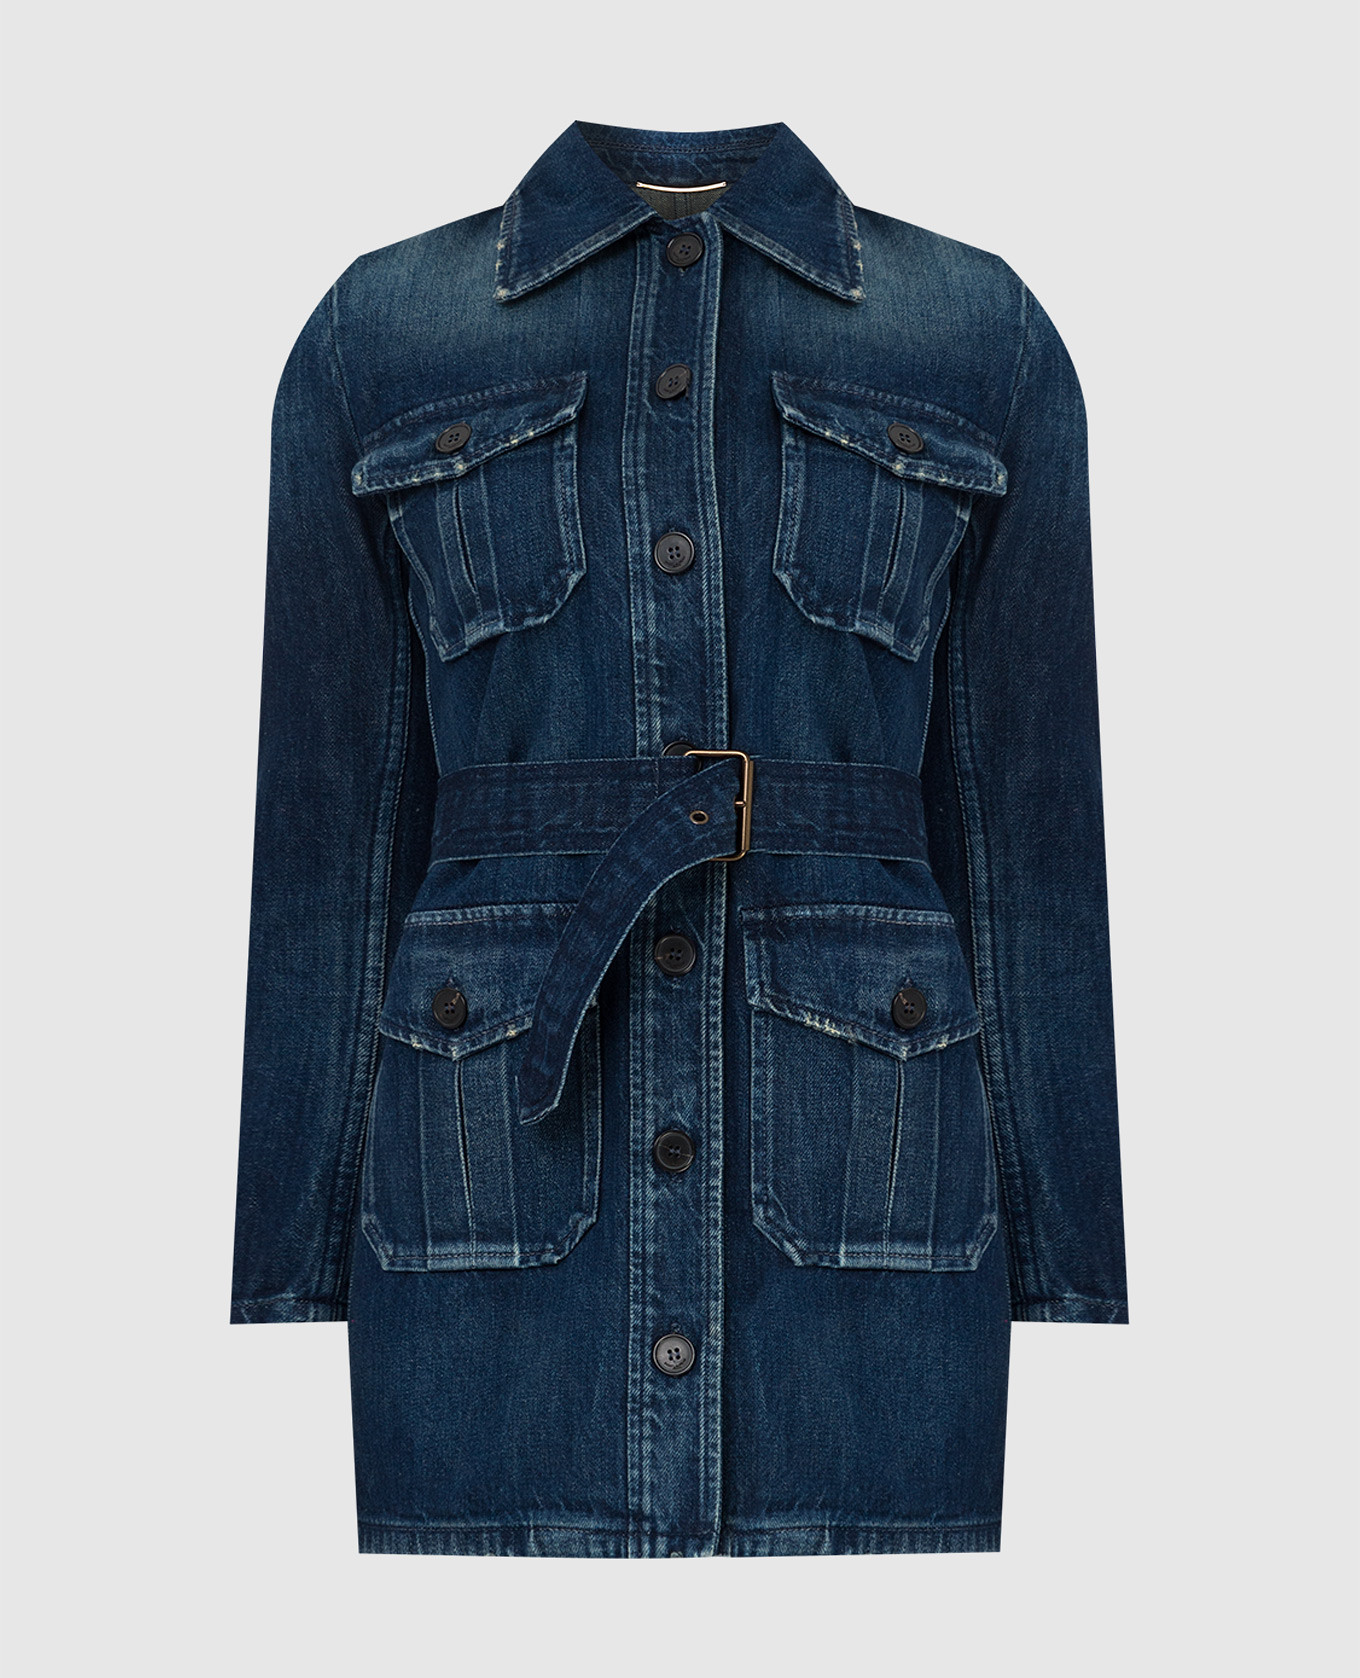 Charcoal Fashion Women's Mid Blue Short Length Stretch Denim Jacket Top, Jean  Jacket, Distressed, New, Sizes UK 8 10 12 14 16 18 20 22 - Etsy